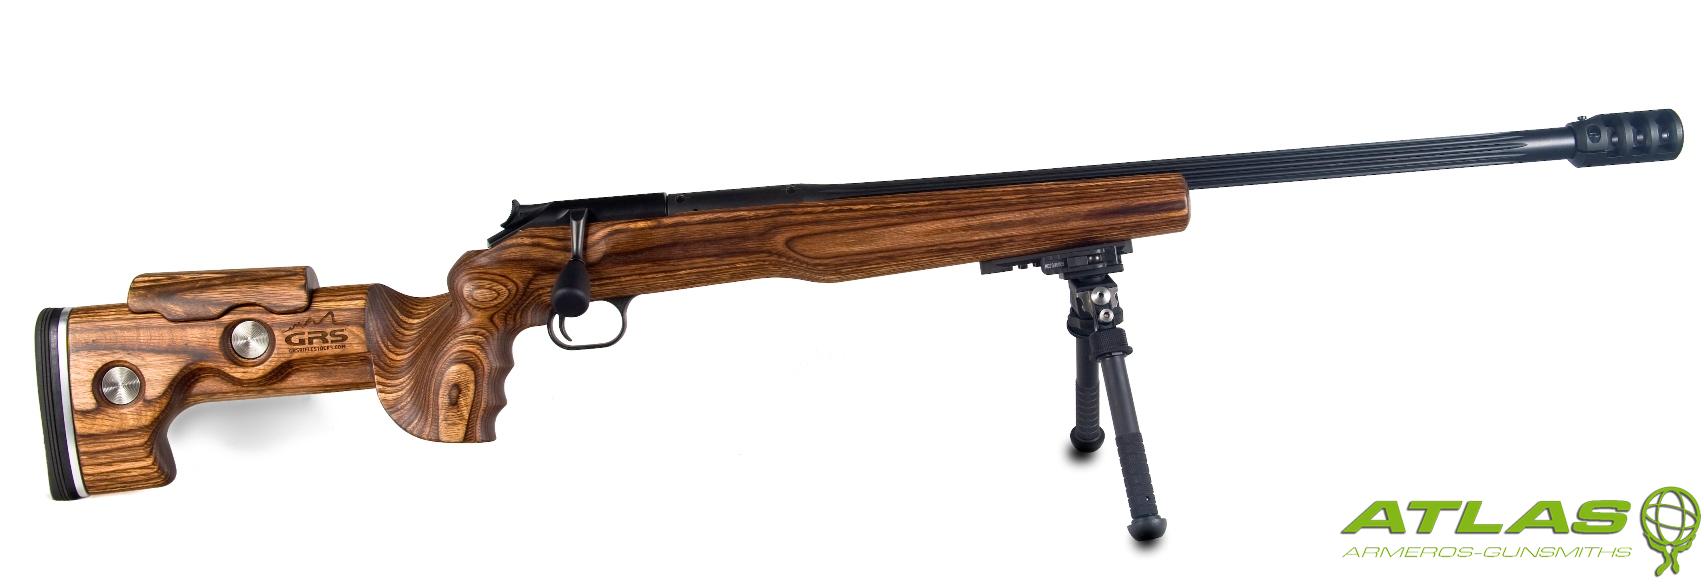 Nuevo bípode para rifle: Atlas Bipod BT65 LW17 - Ramón Dominguis